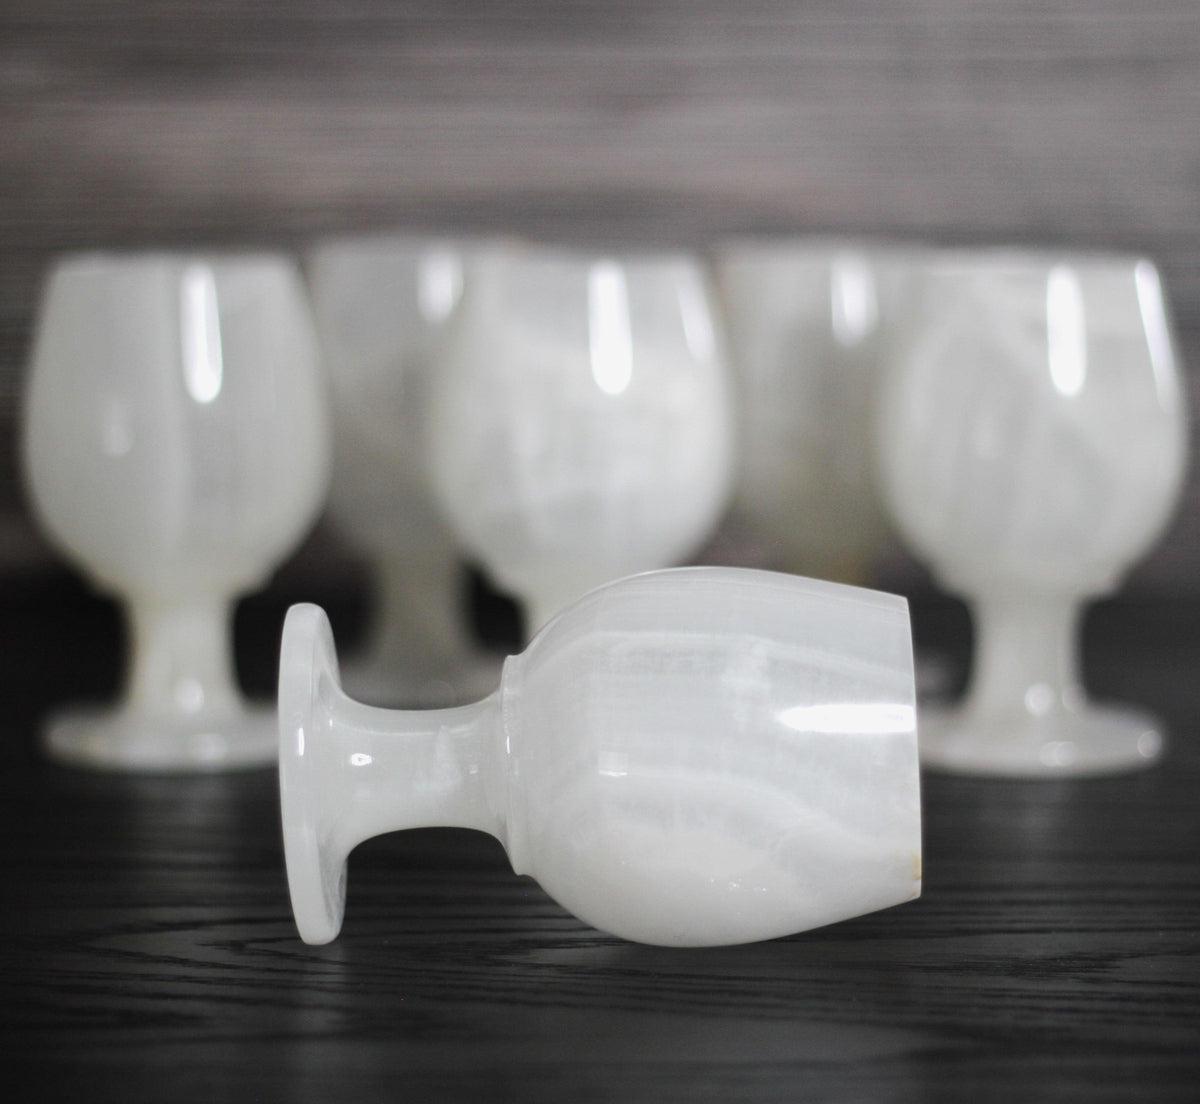 10 oz. White Onyx Wine Glasses Gift Set - Marble Cultures